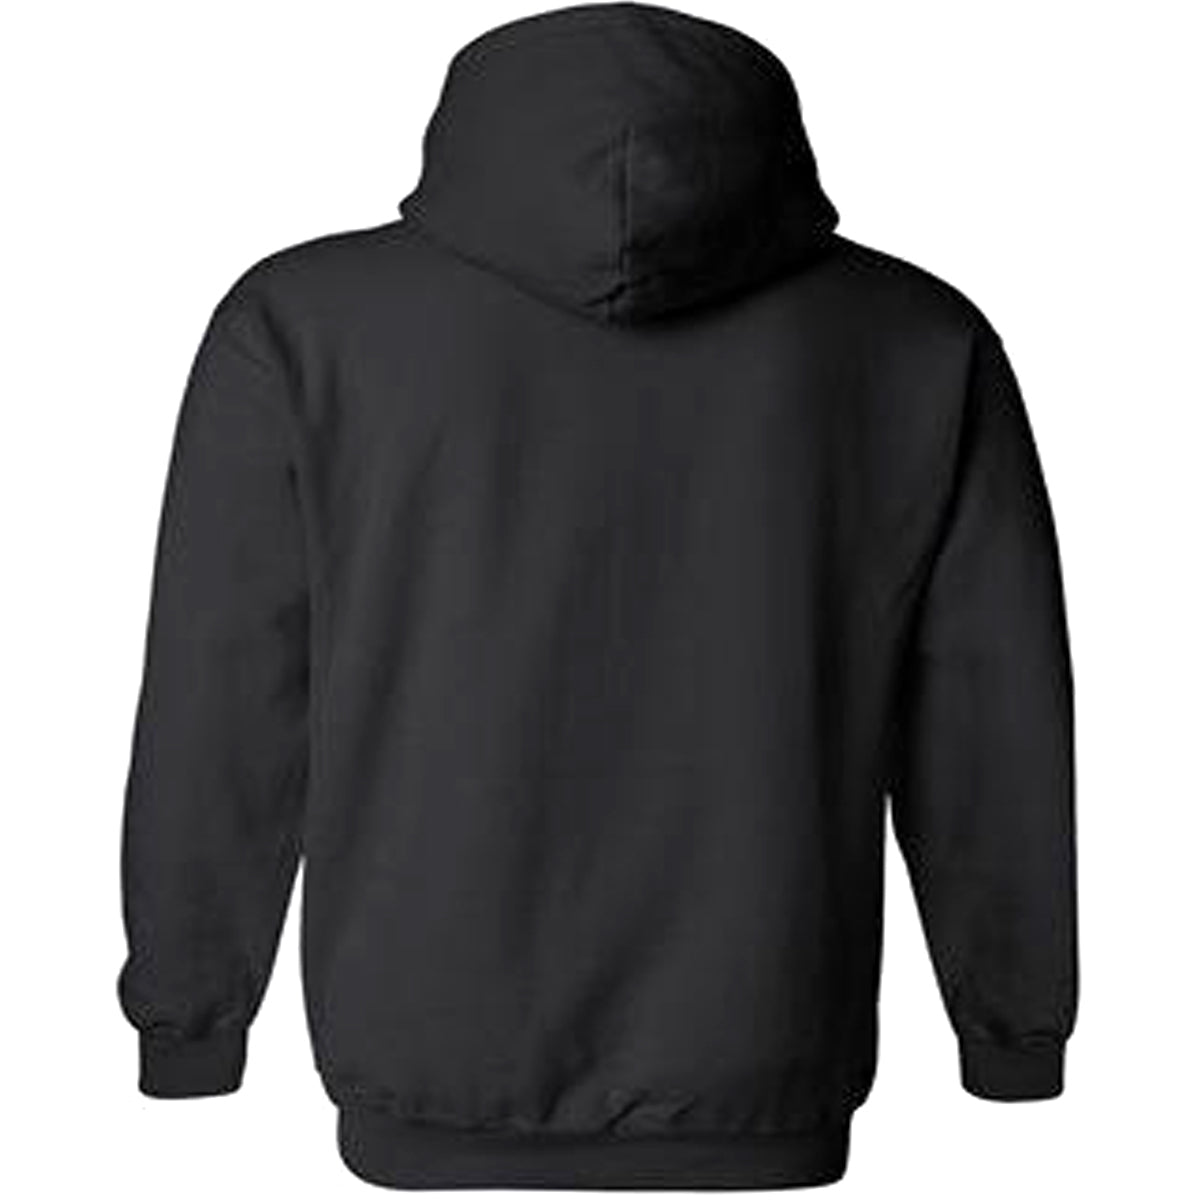 Blank Black Sawyer Hooded Sweatshirt Stitched Jersey